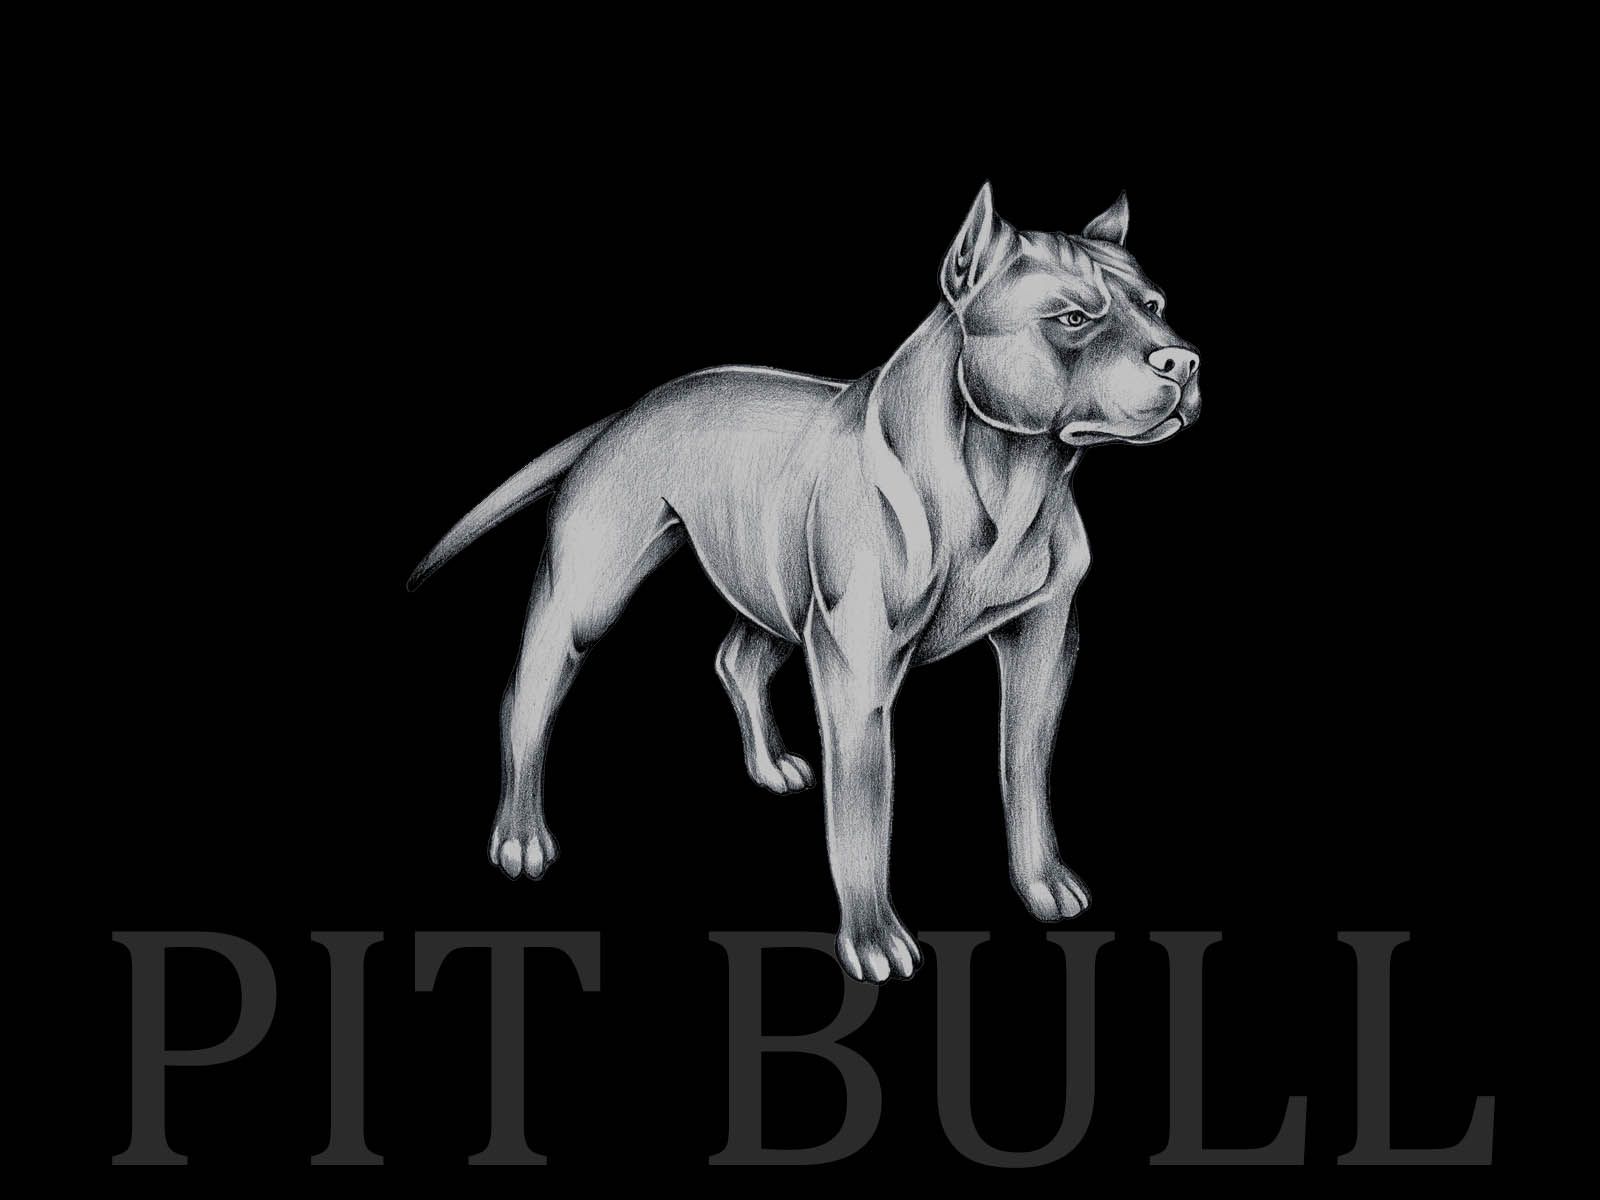 Image Gallery: pitbull dog (Dec 12 2012 19:56:58)